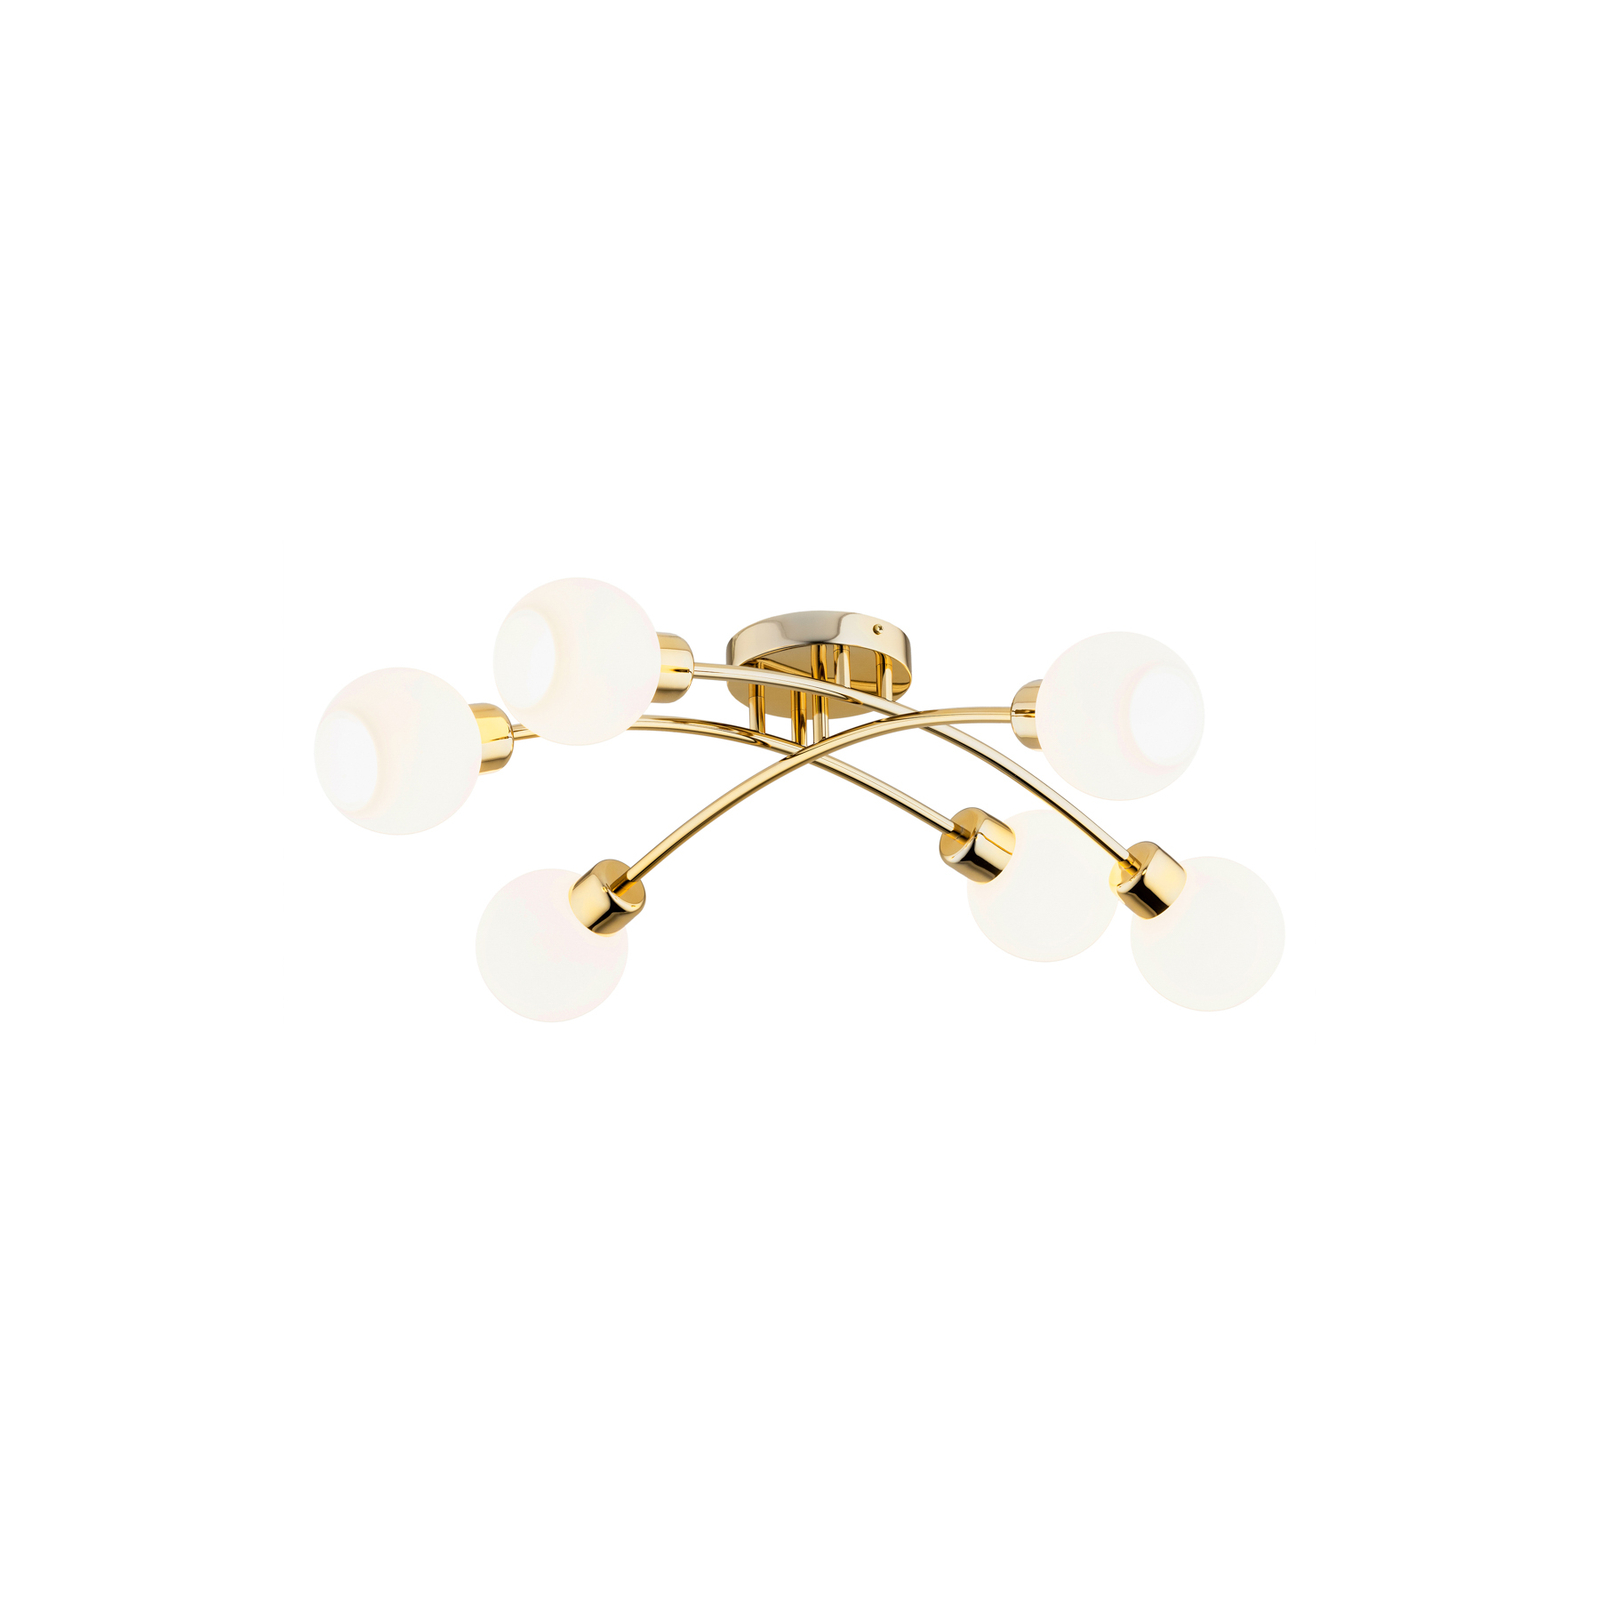 Marlo ceiling light, brass, opal glass, 6-bulb